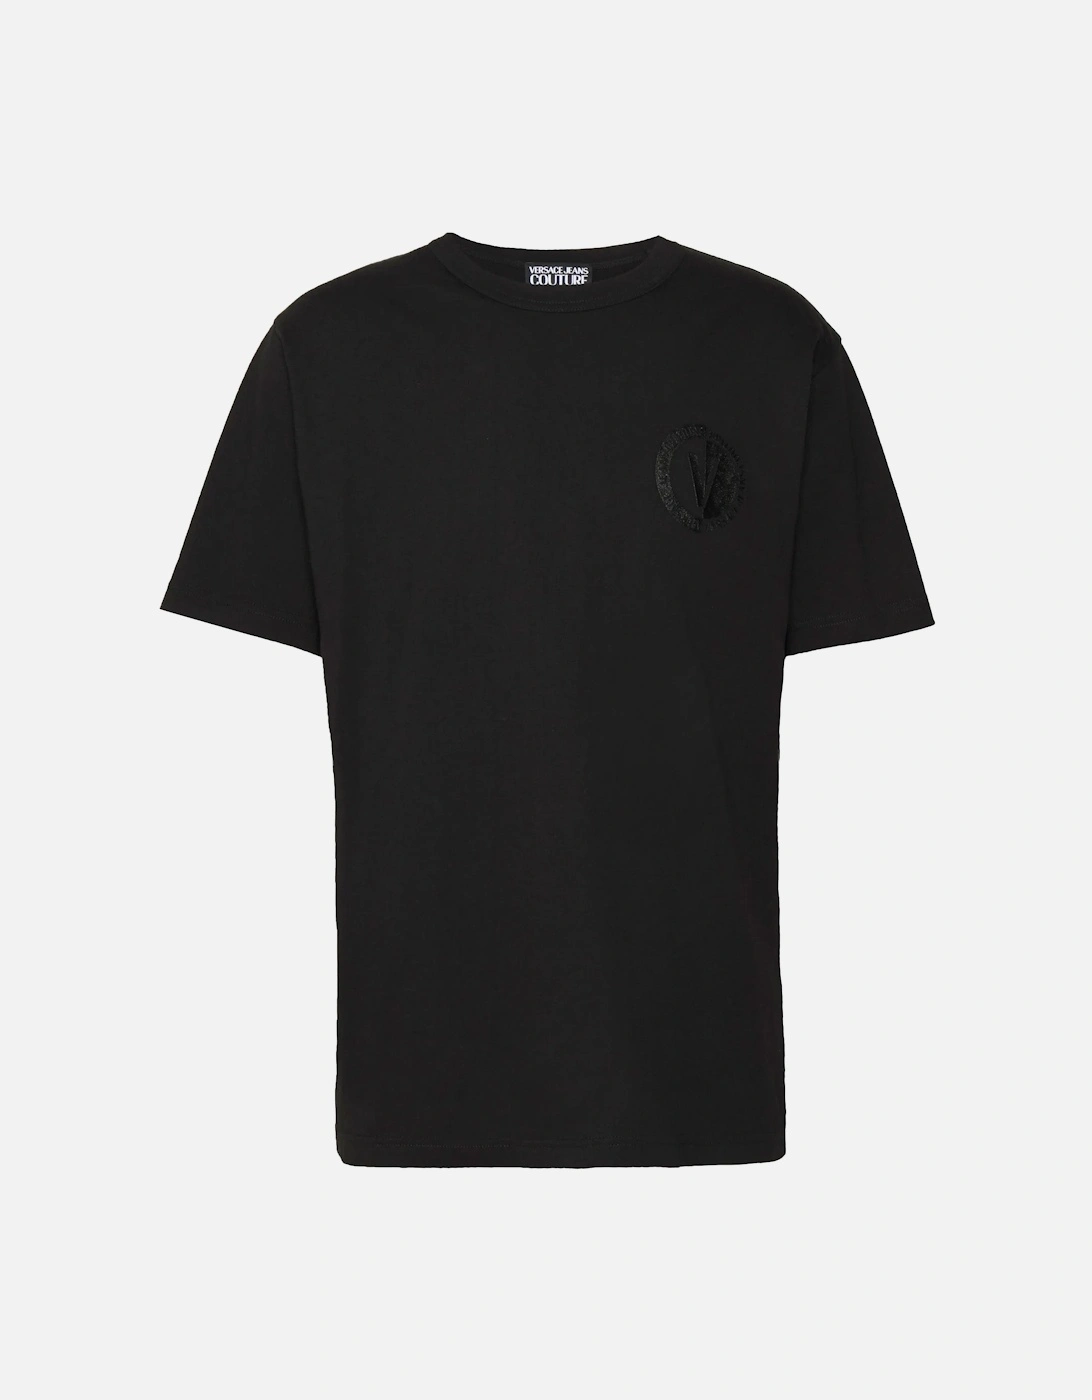 Jeans Couture new v-emblem logo t-shirt black, 2 of 1